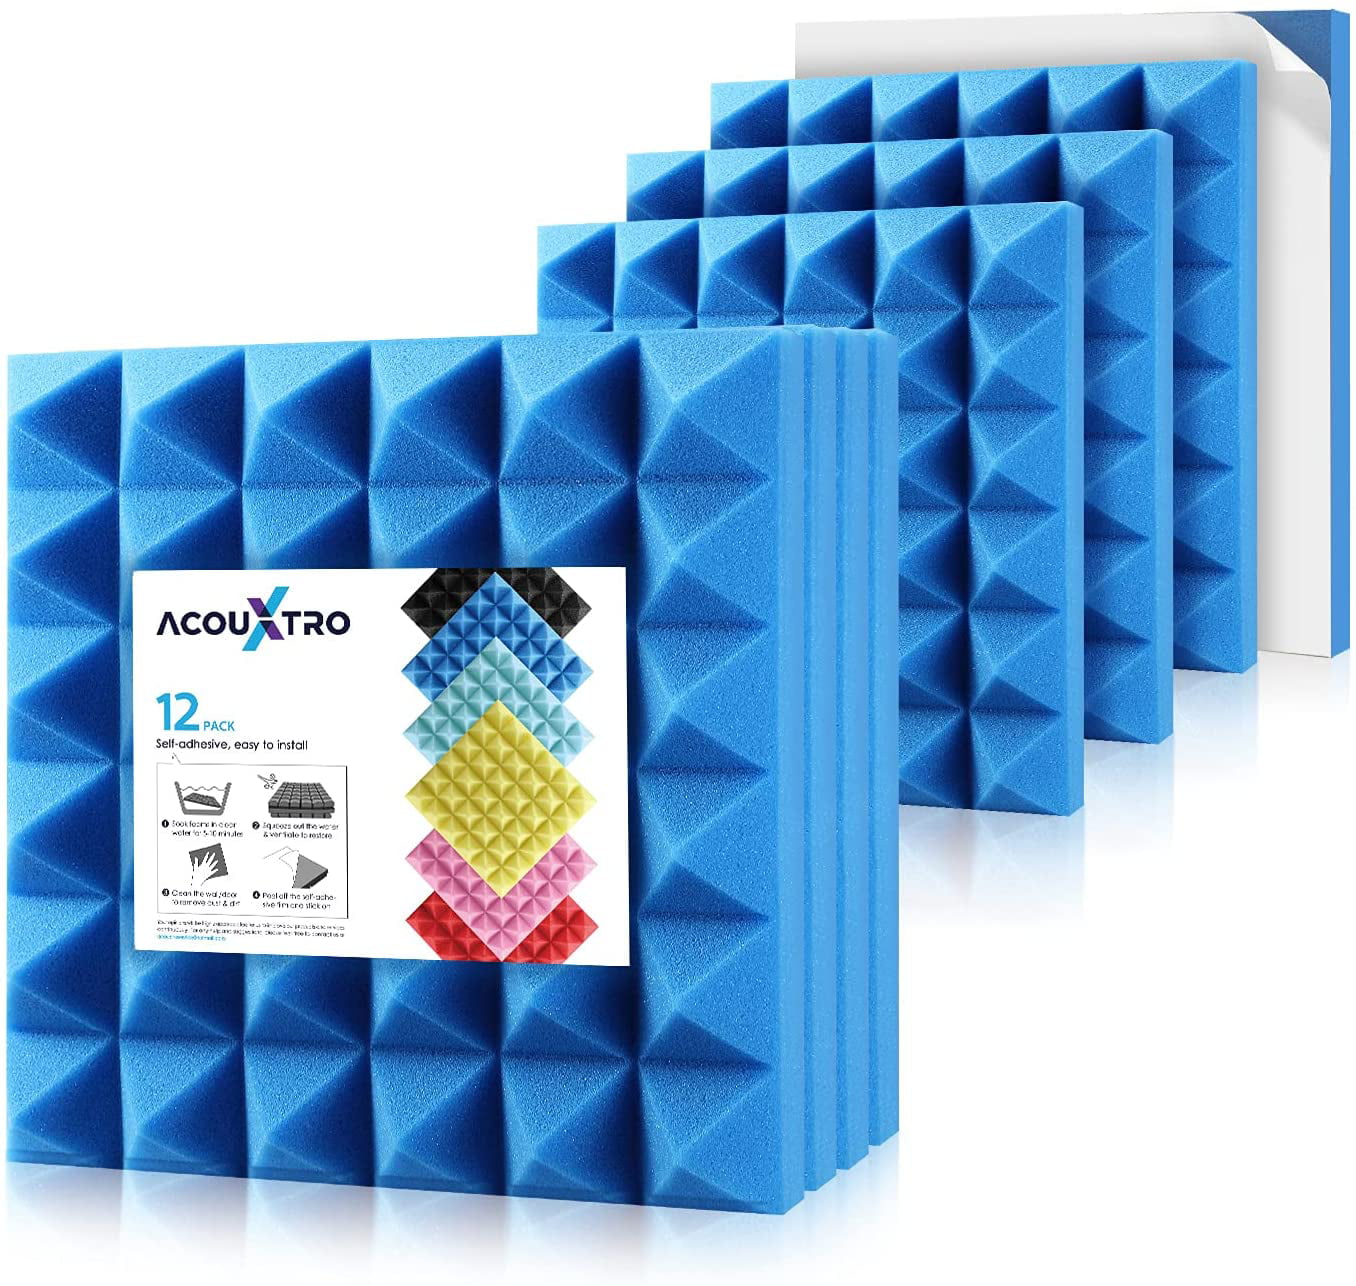 48 X 24 X 2 Foamily Acoustic Foam Sound Absorption Pyramid Studio Treatment Wall Panel 